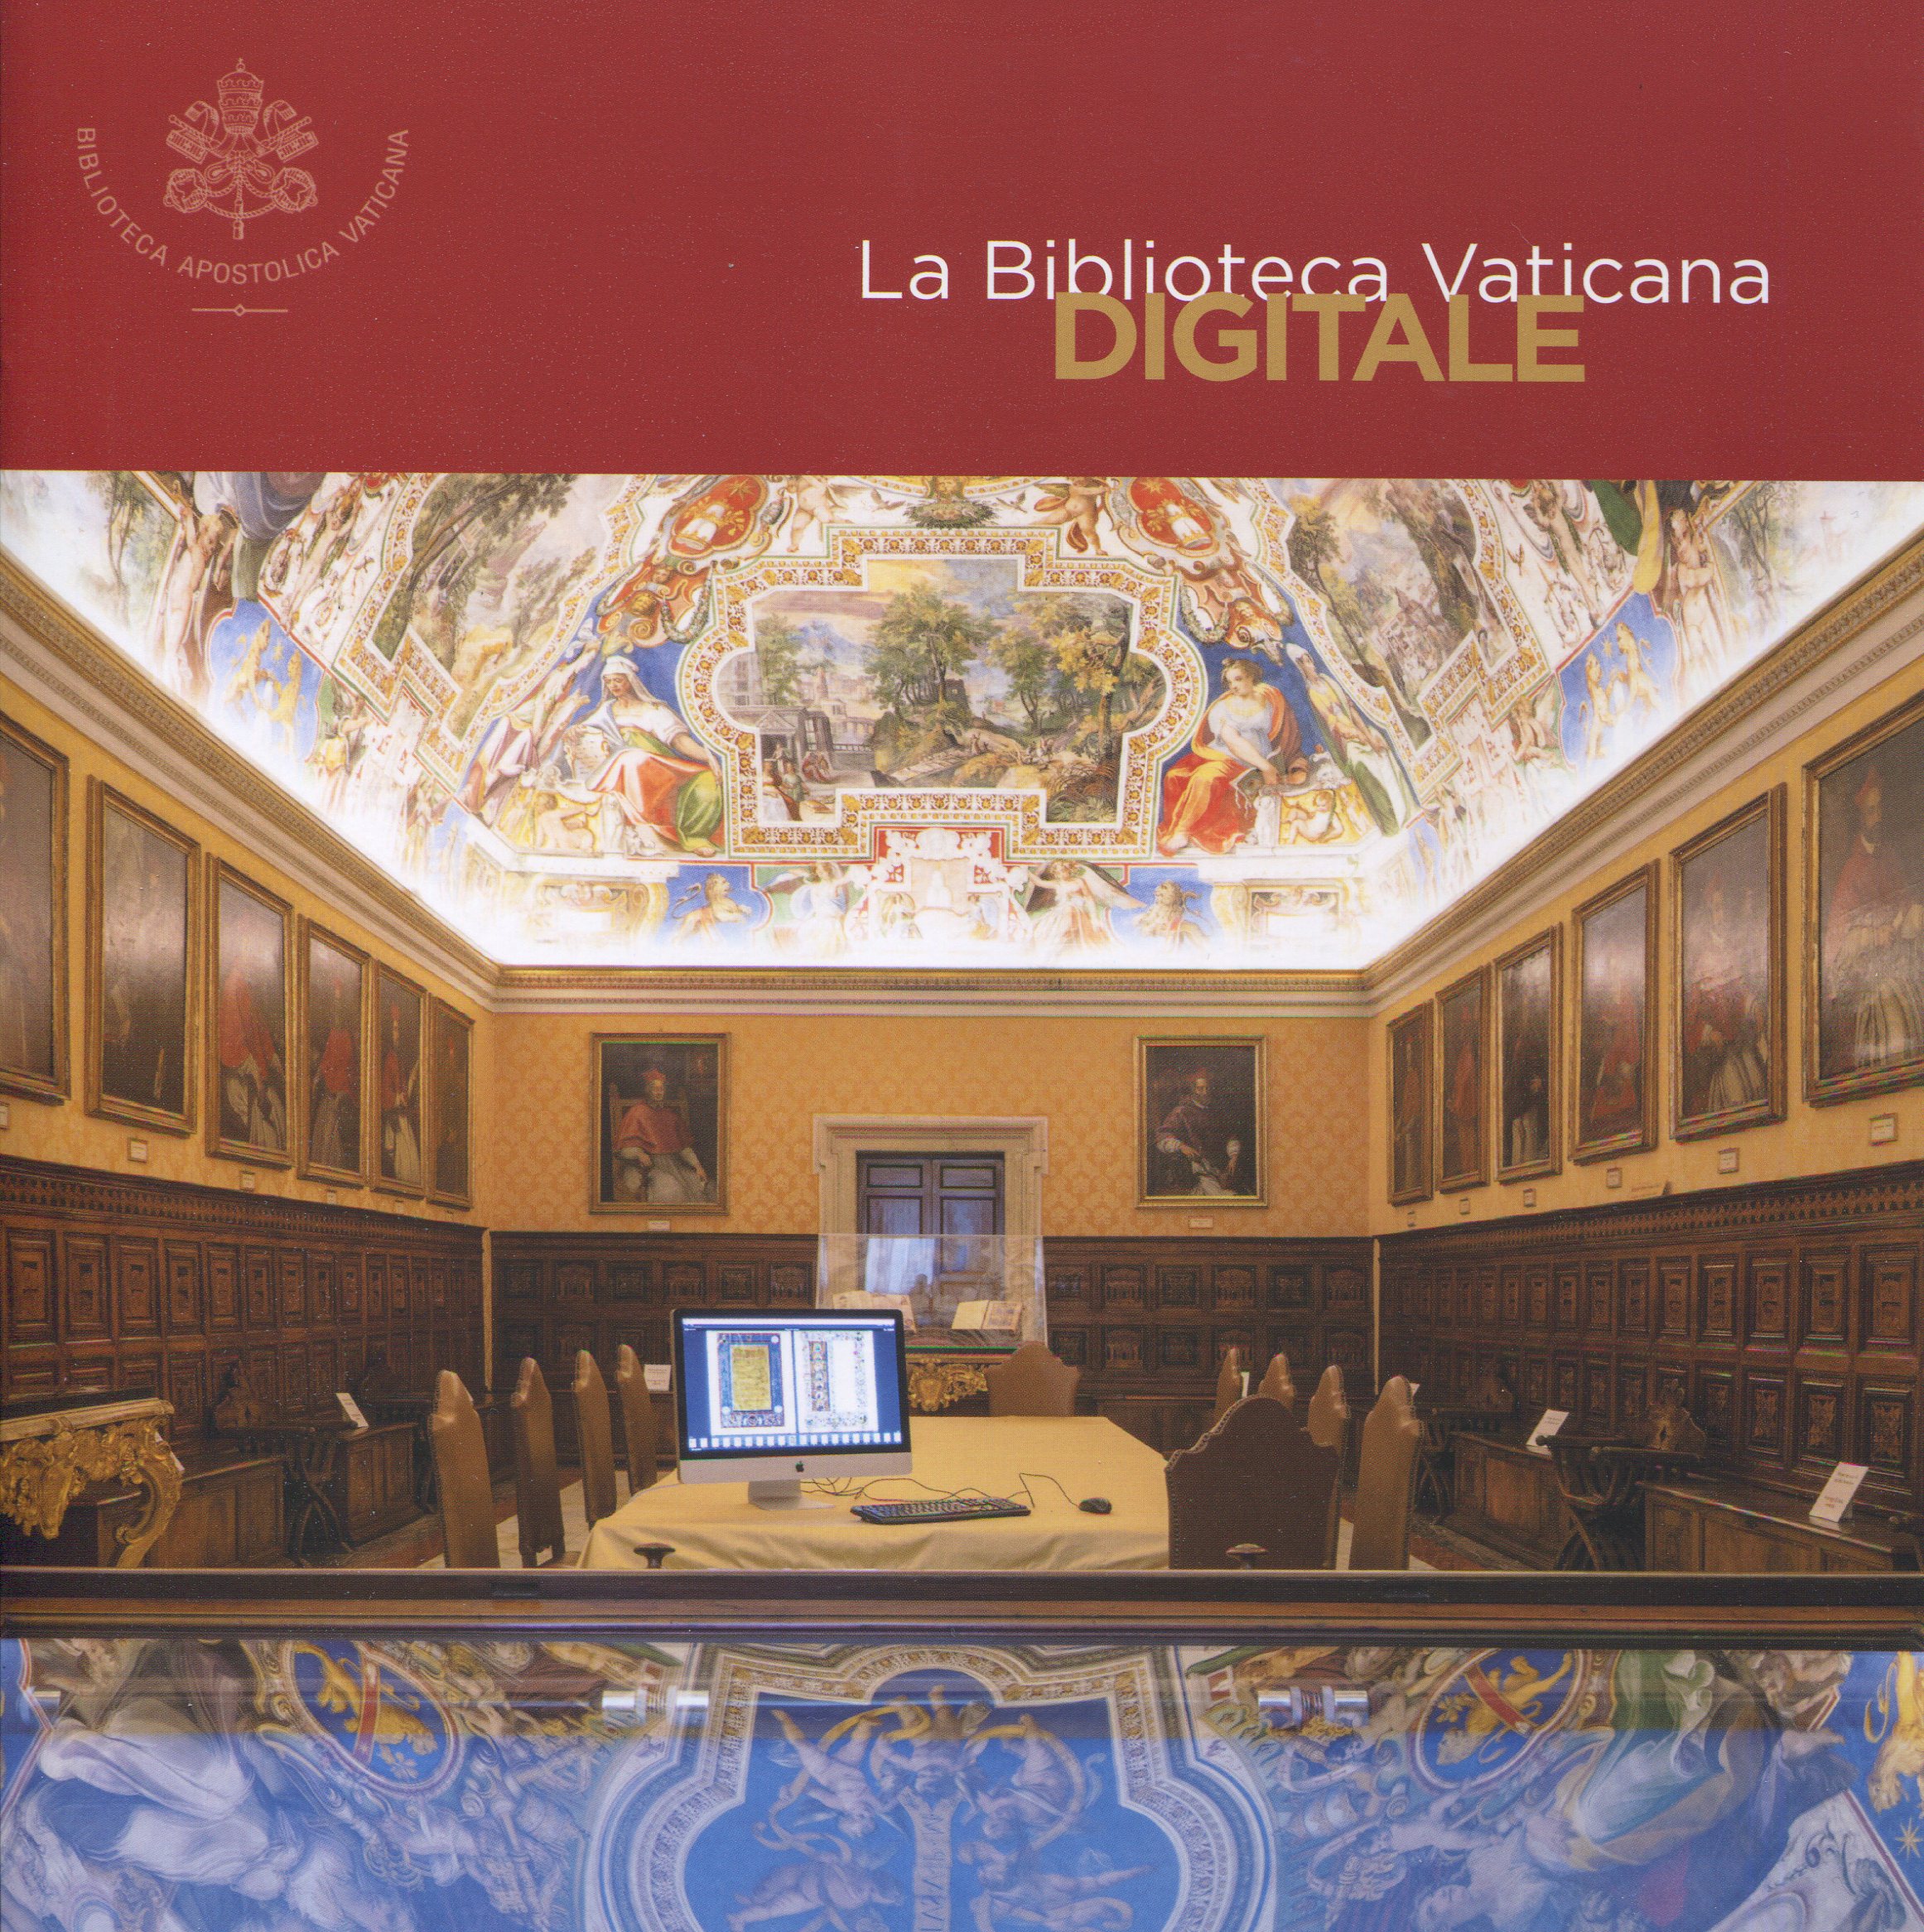 La Biblioteca Vaticana Digitale - 